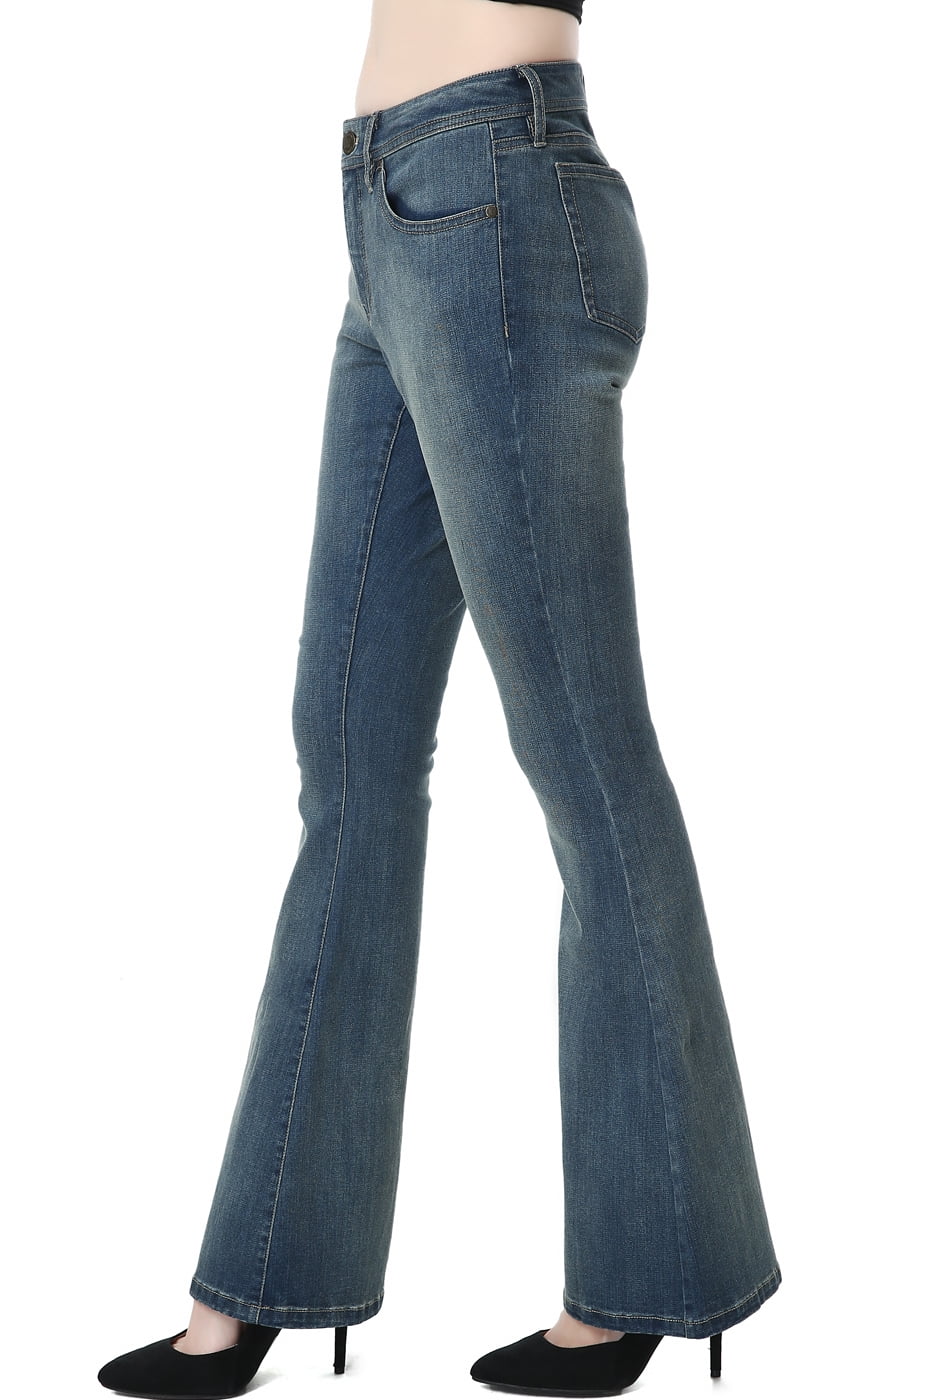 Phistic - Women's Ultra Stretch Medium Indigo Flare Jeans - Walmart.com ...